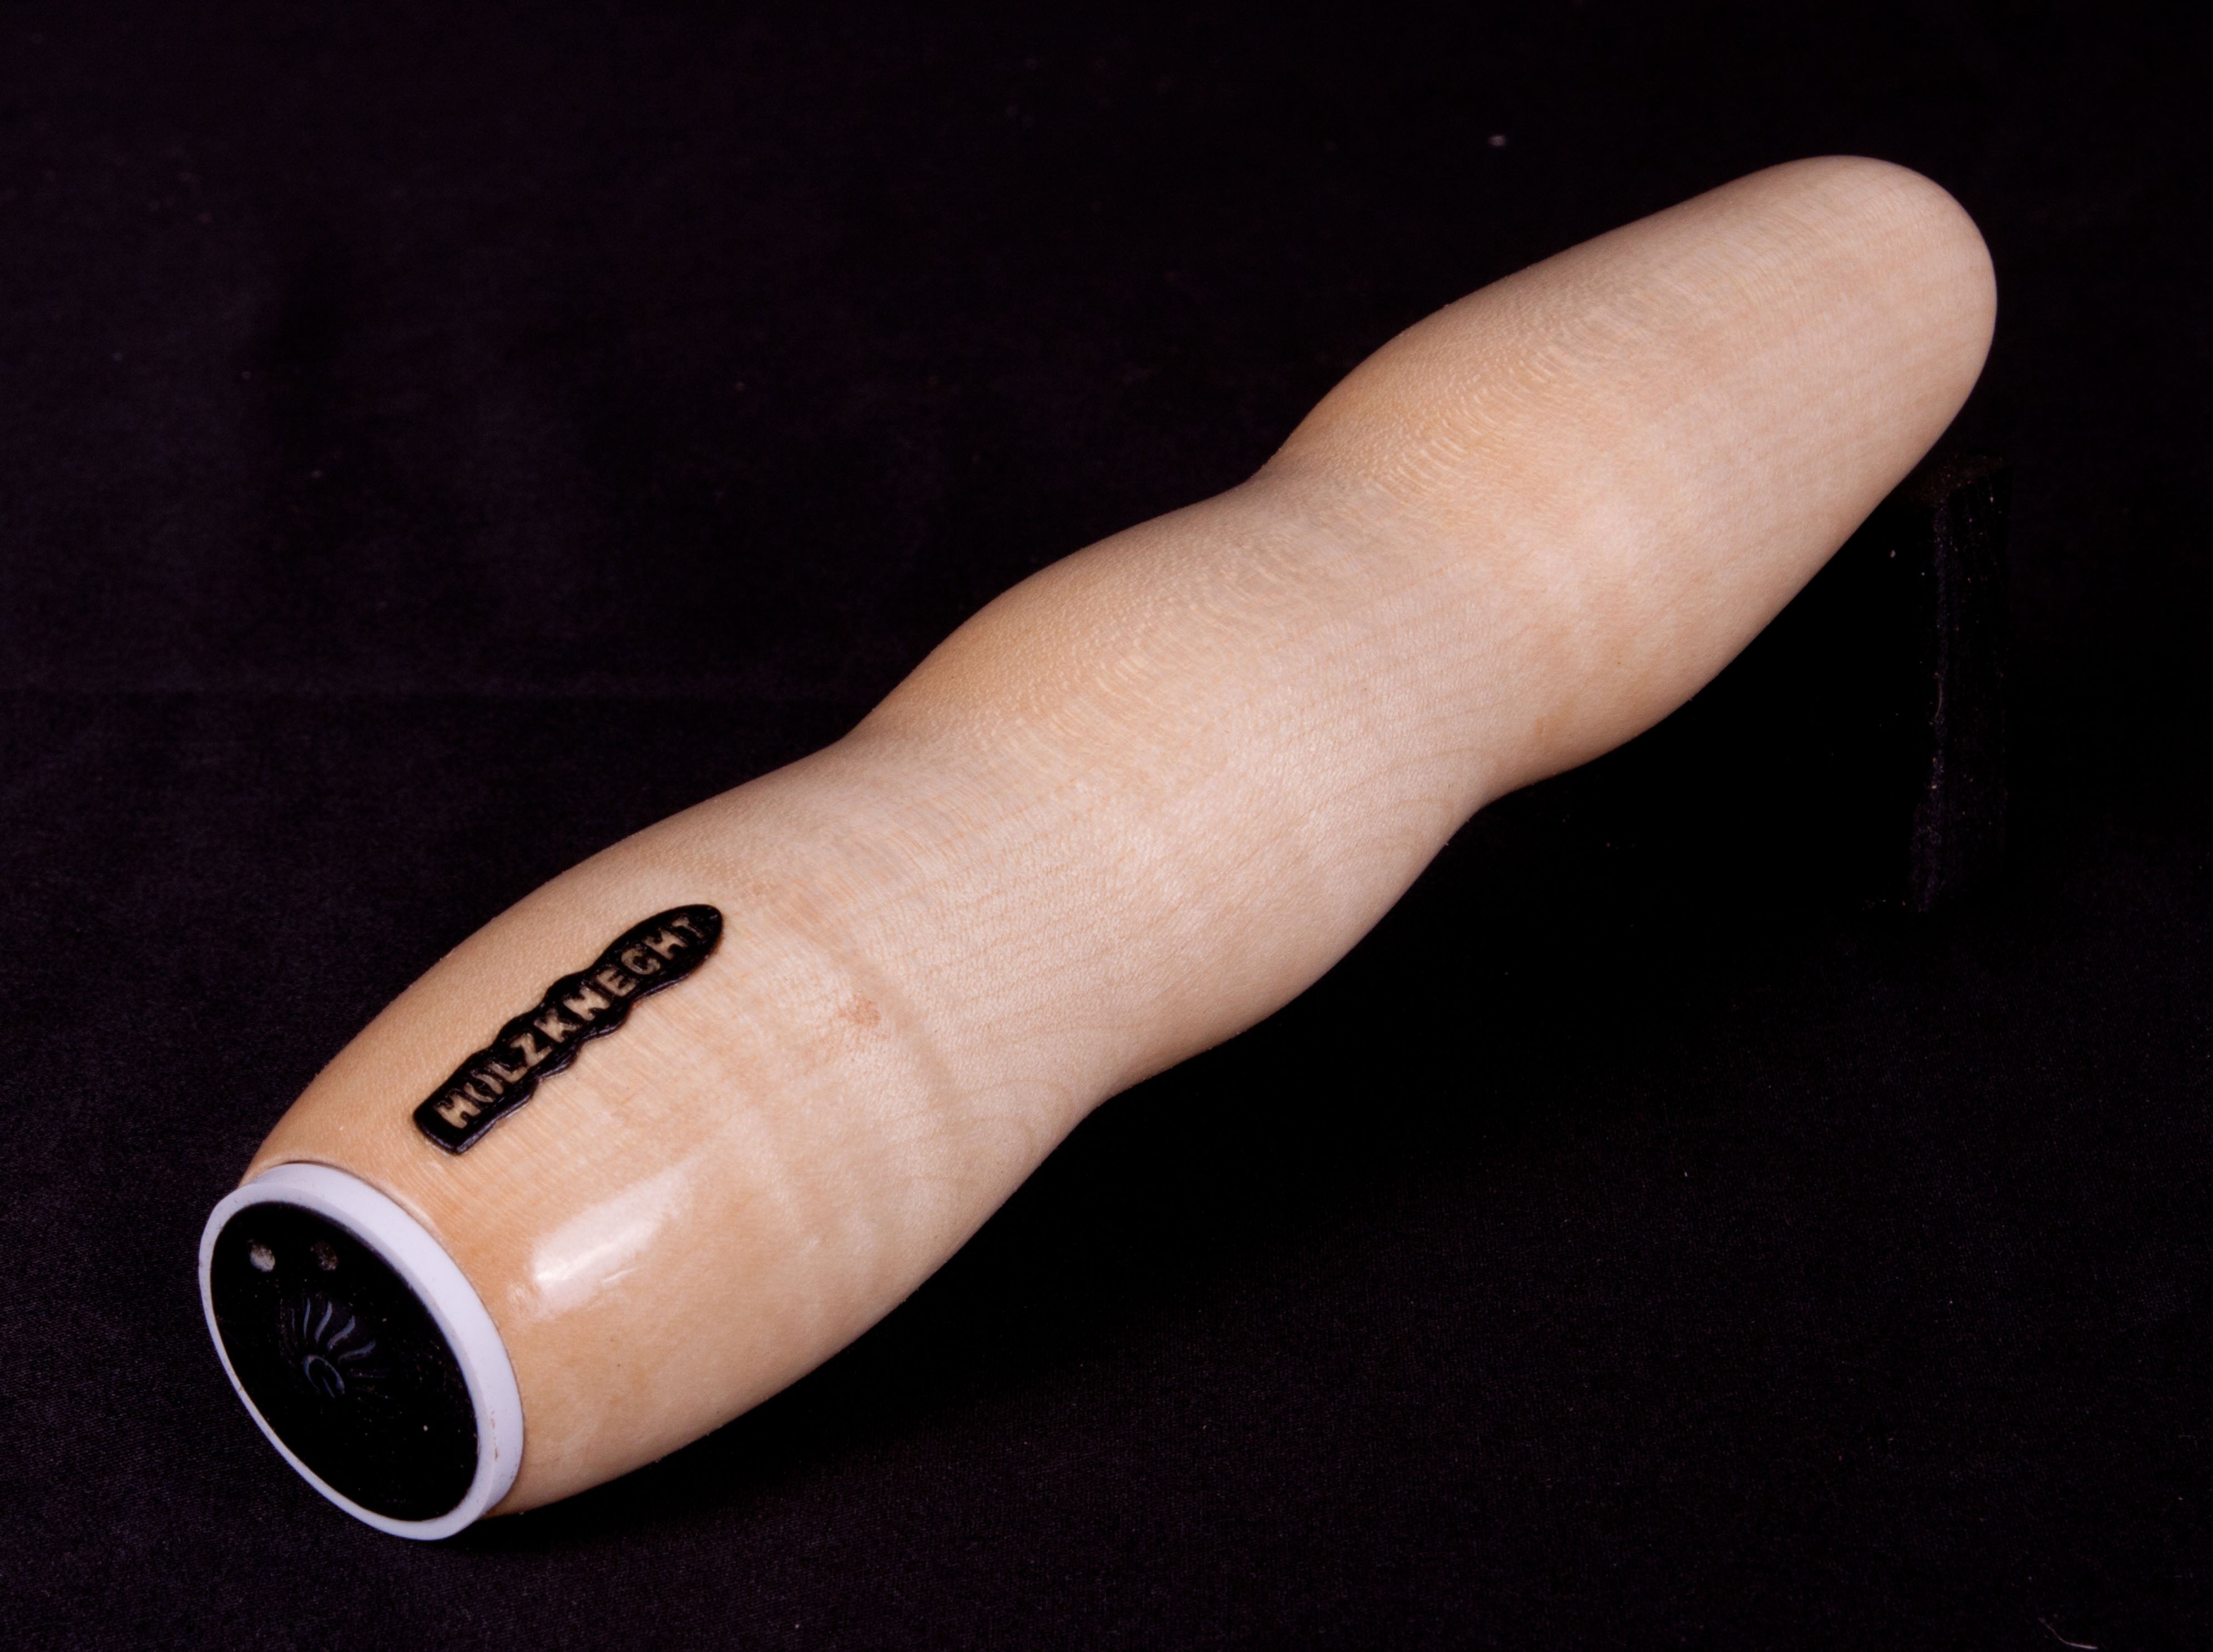 SUMMSI || Ahorn || Holzvibrator || Holzdildo || Sex Toy || Wood Vibrator || handmade by Holz-Knecht